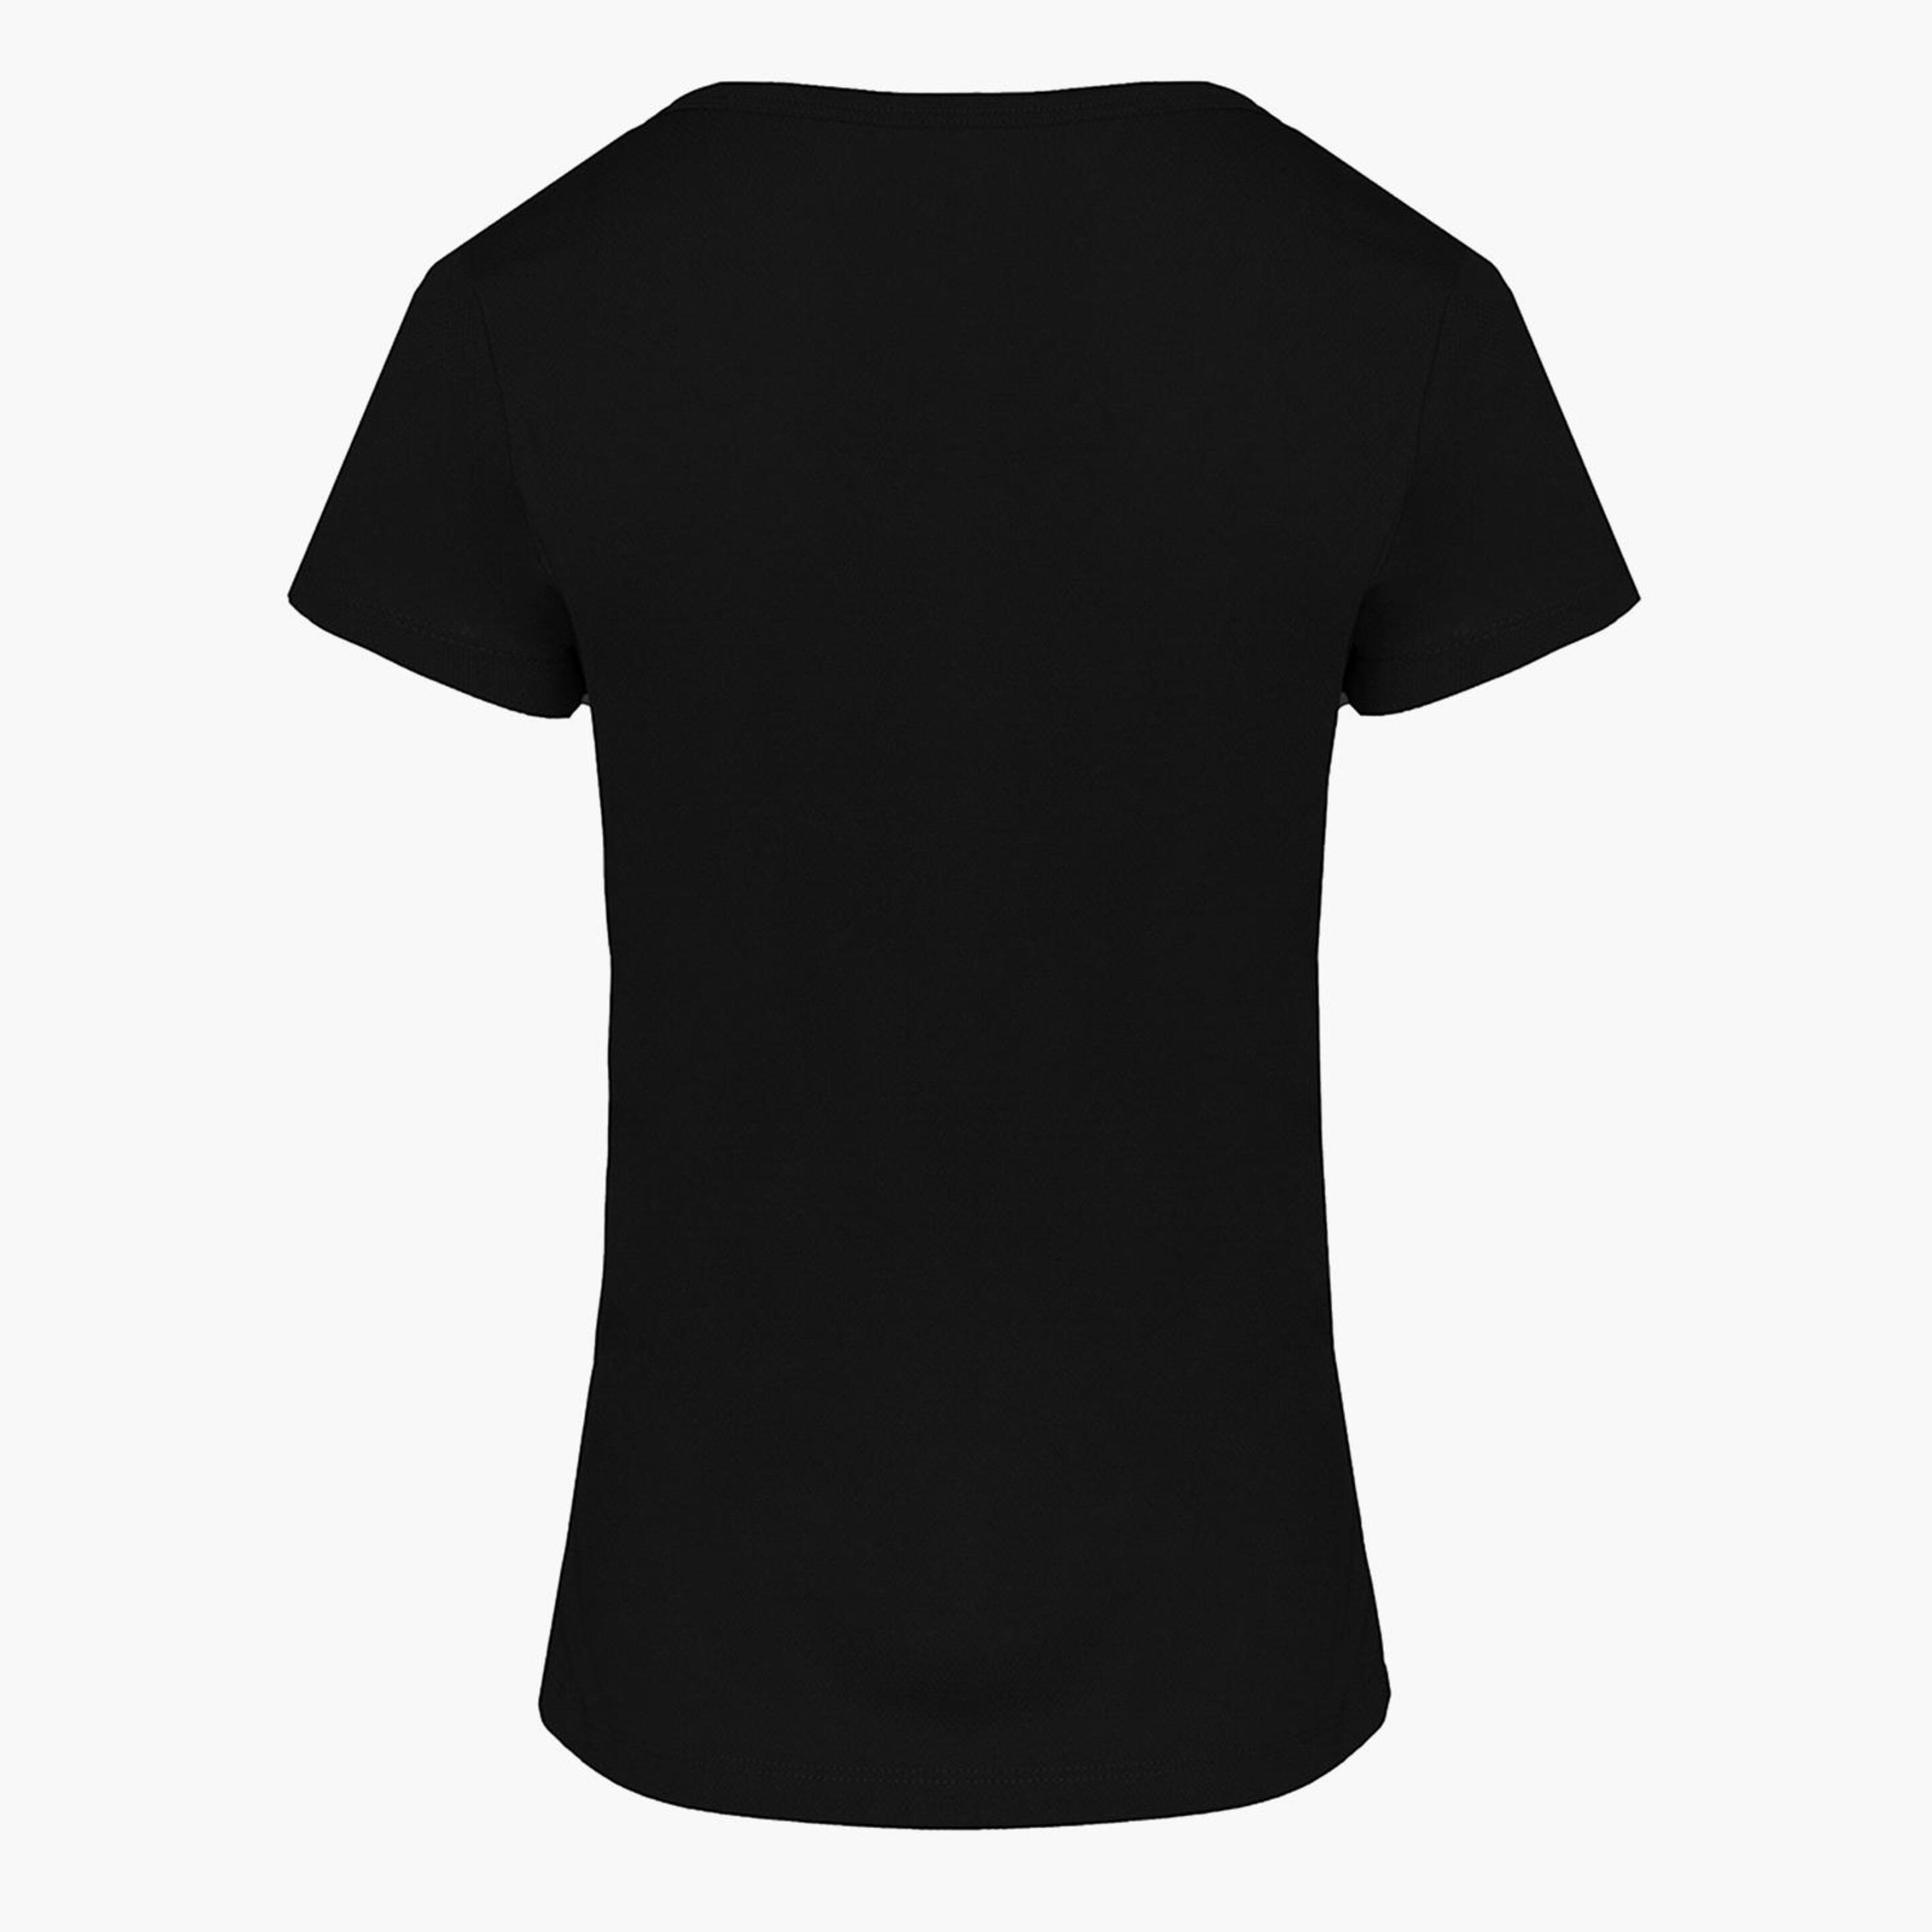 Izas Adaia II - Negro - Camiseta Montaña Mujer